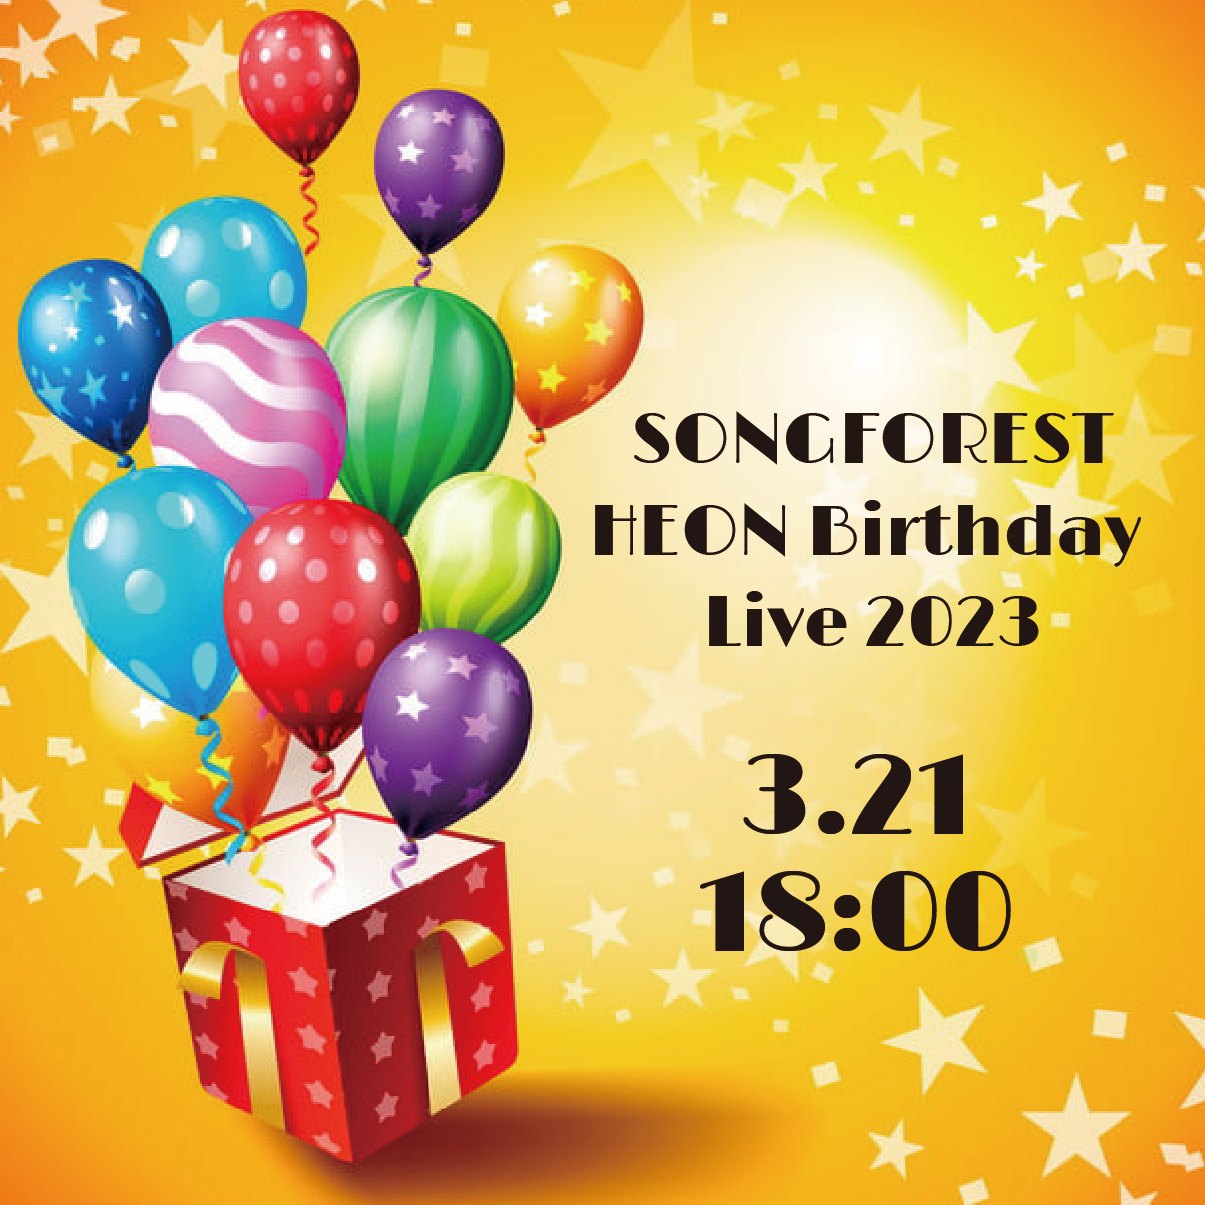 【整理番号抽選先行販売】SONGFOREST HEON Birthday Live 2023 18:00公演